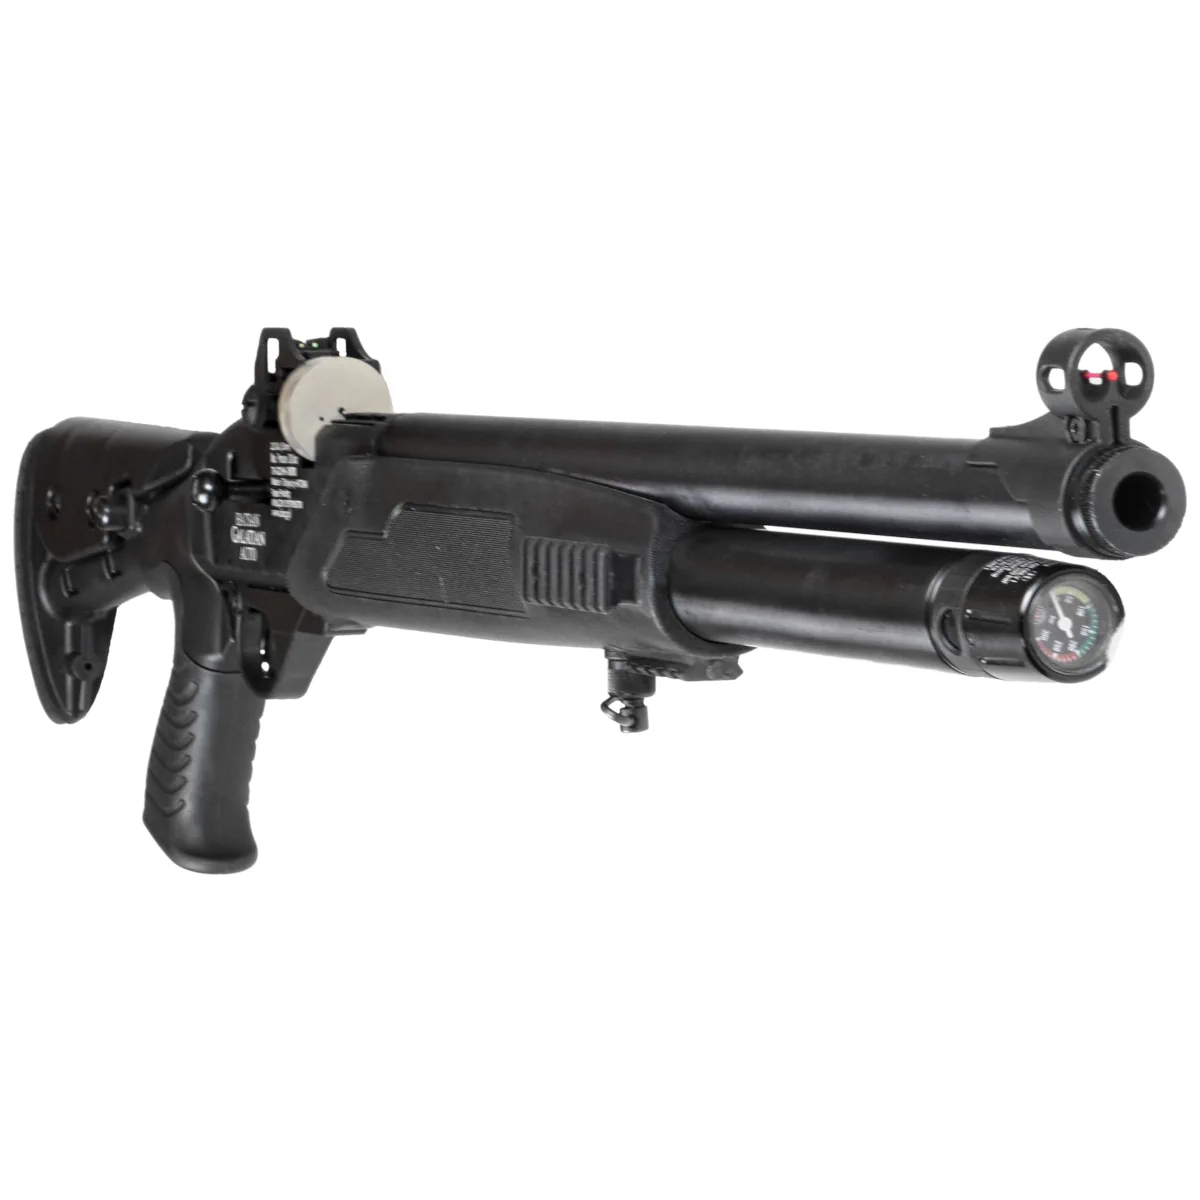 Semi Auto PCP Hatsan Galatian Tact Auto 5.5 mm air rifle